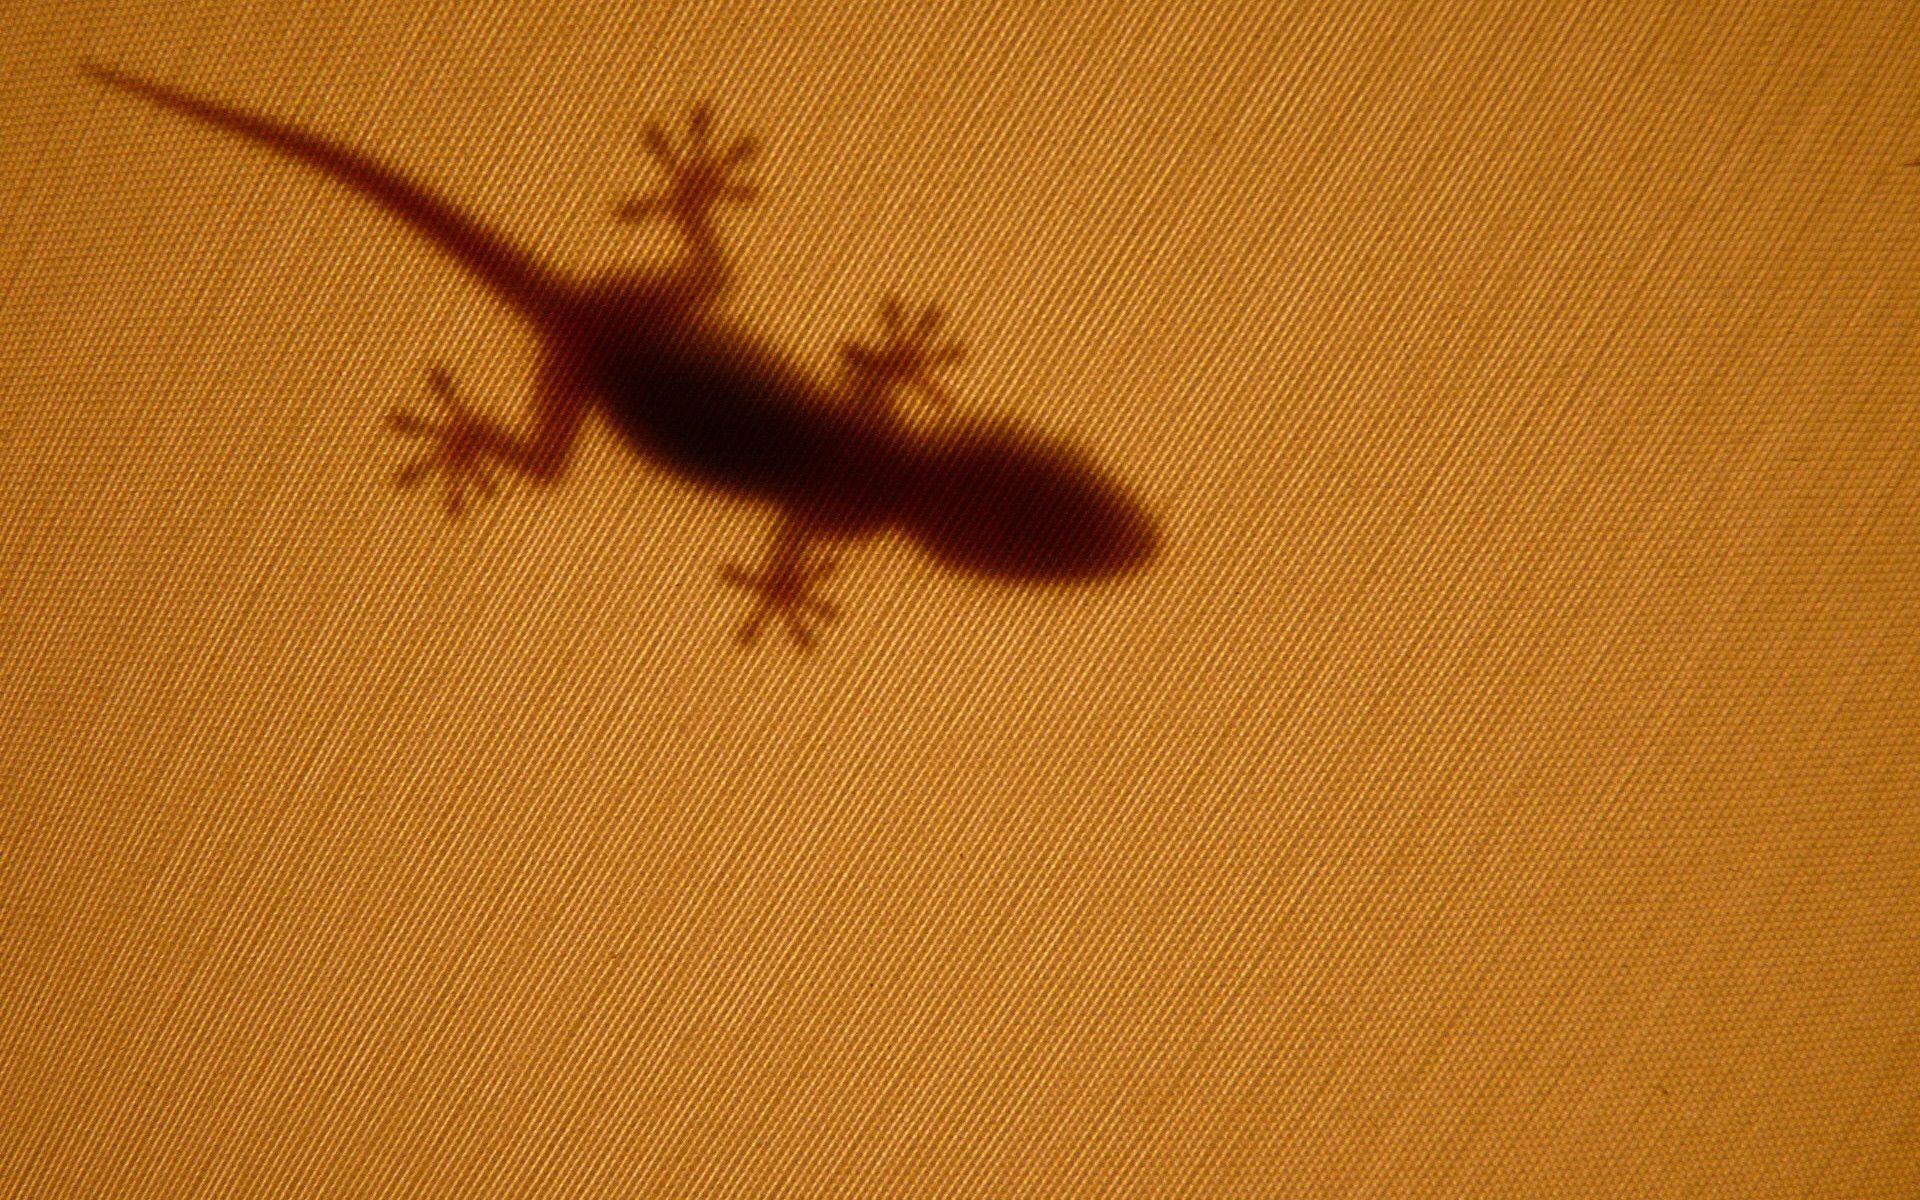 Gecko shadow wallpaper Animal desktop background. Animal